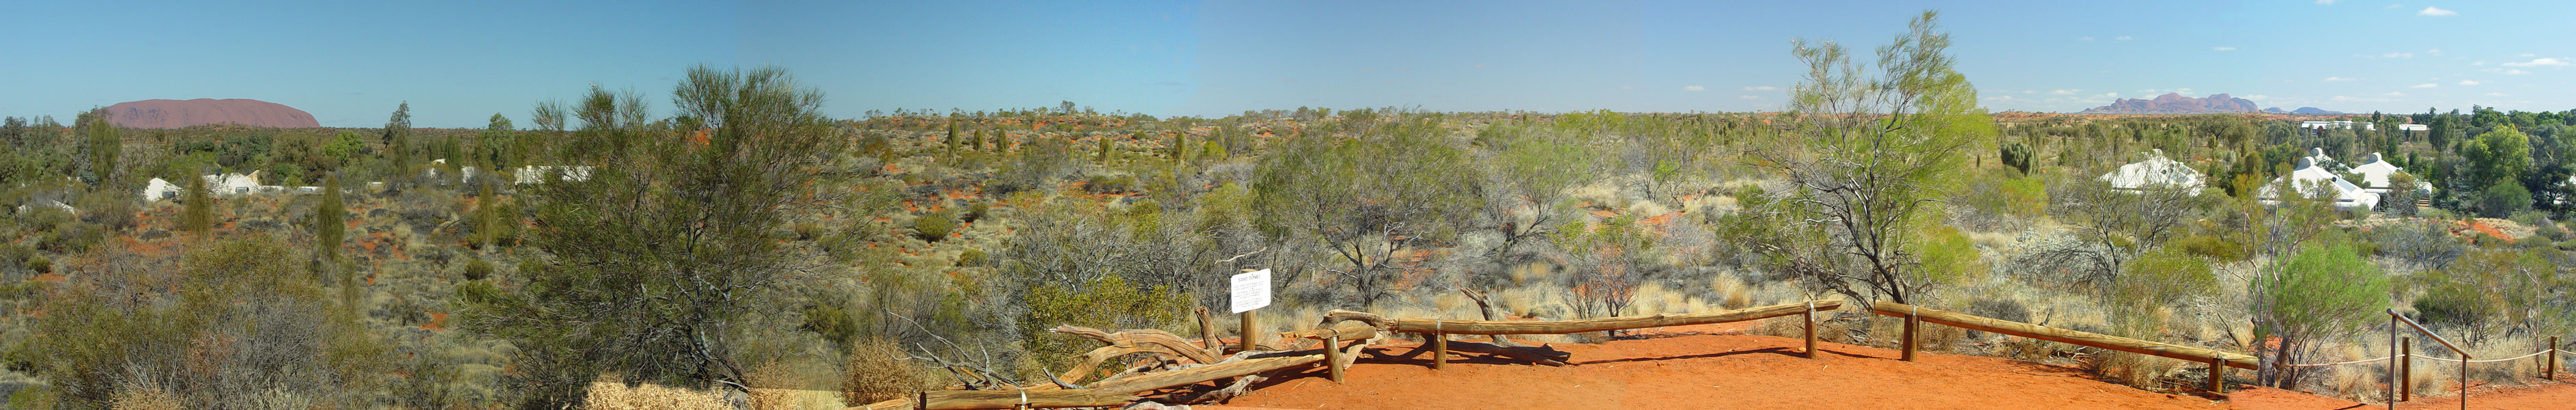 Ulura (left) and Kata Tjuta (right)